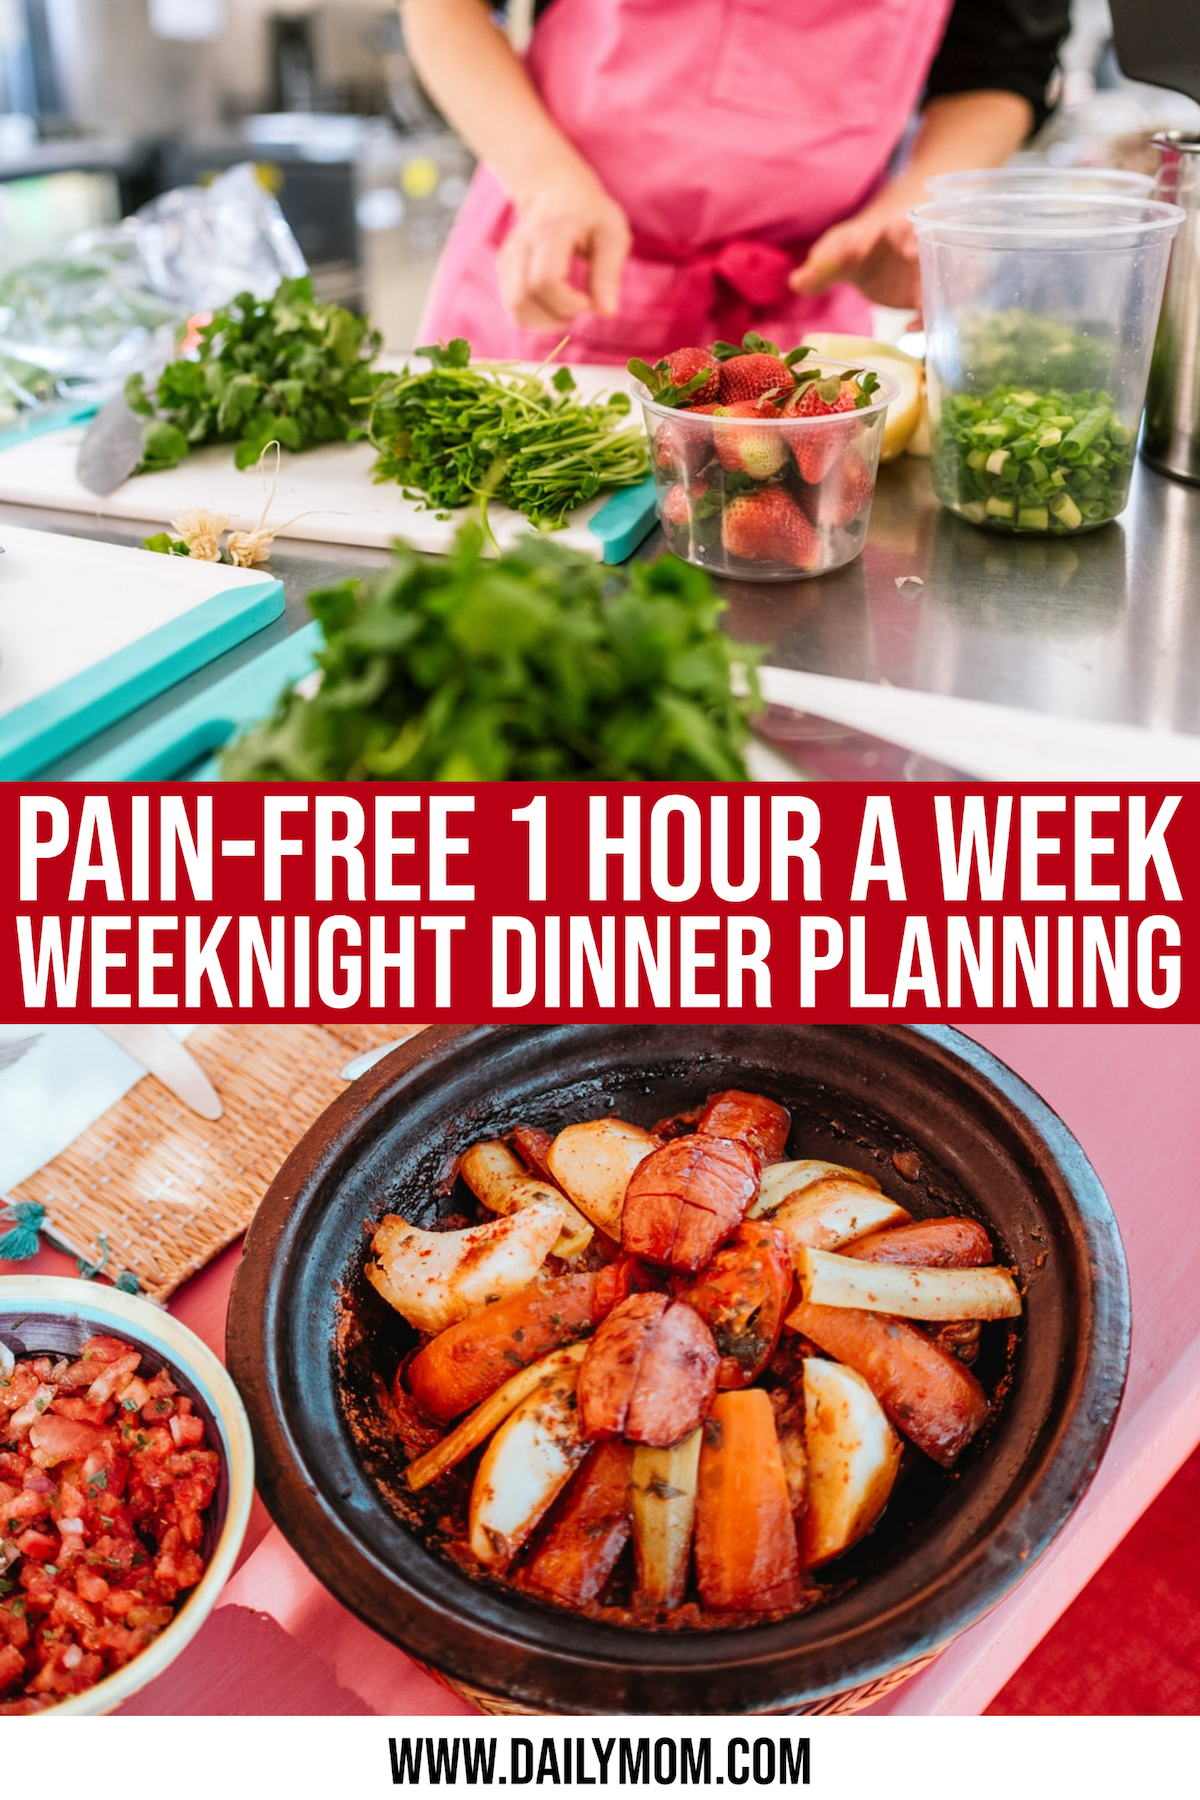 Pain-free Weeknight Dinner Planning In 1 Hour A Week